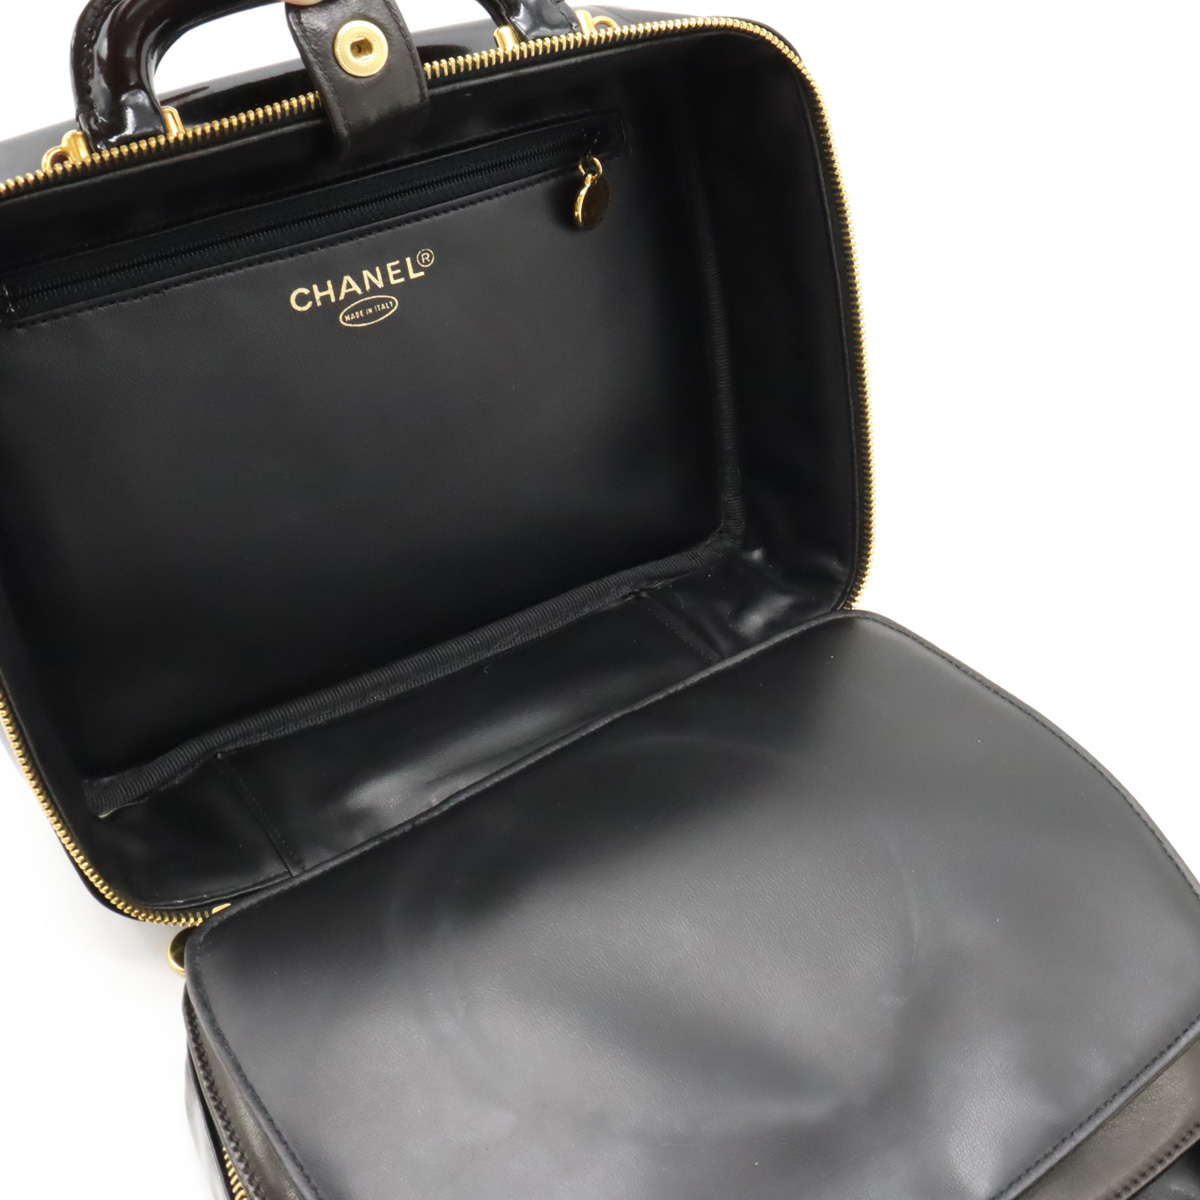 CHANEL CHANEL    coco ... ... сумка   дамская сумка    косметика   мешочек   2WAY  наплечная сумка   эмаль 